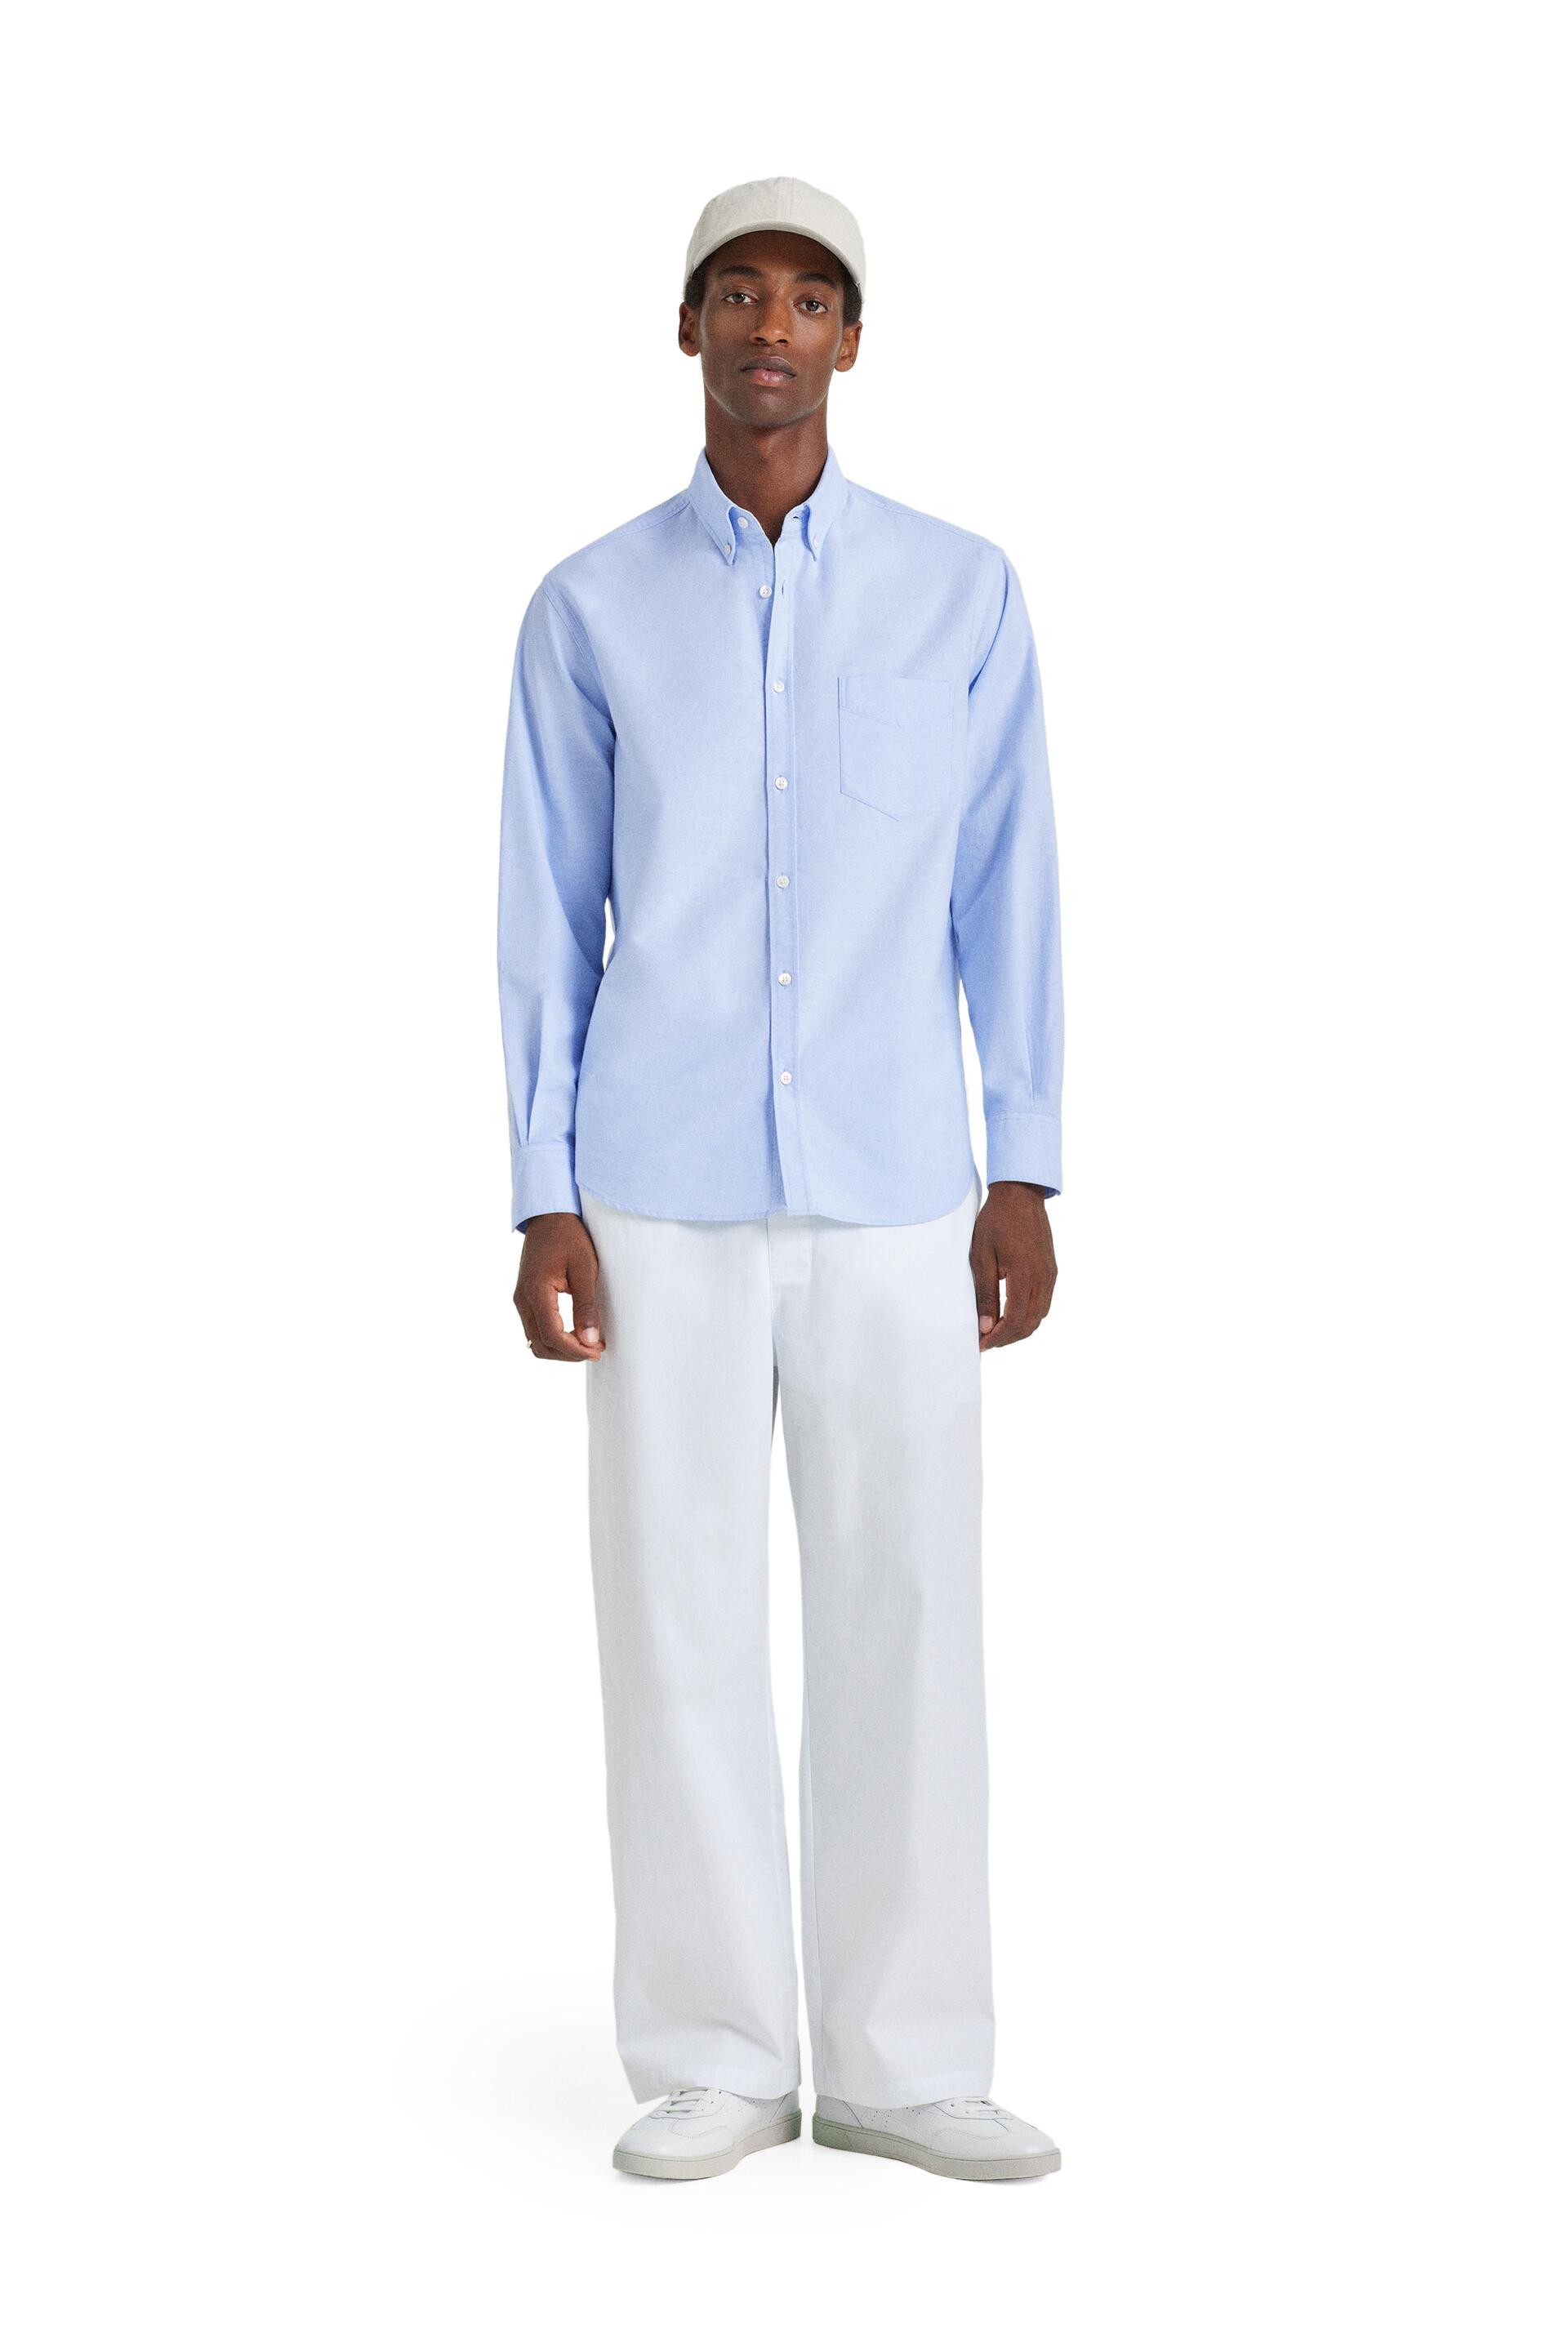 Рубашка мужская ZARA 07545508 голубая S (доставка из-за рубежа)